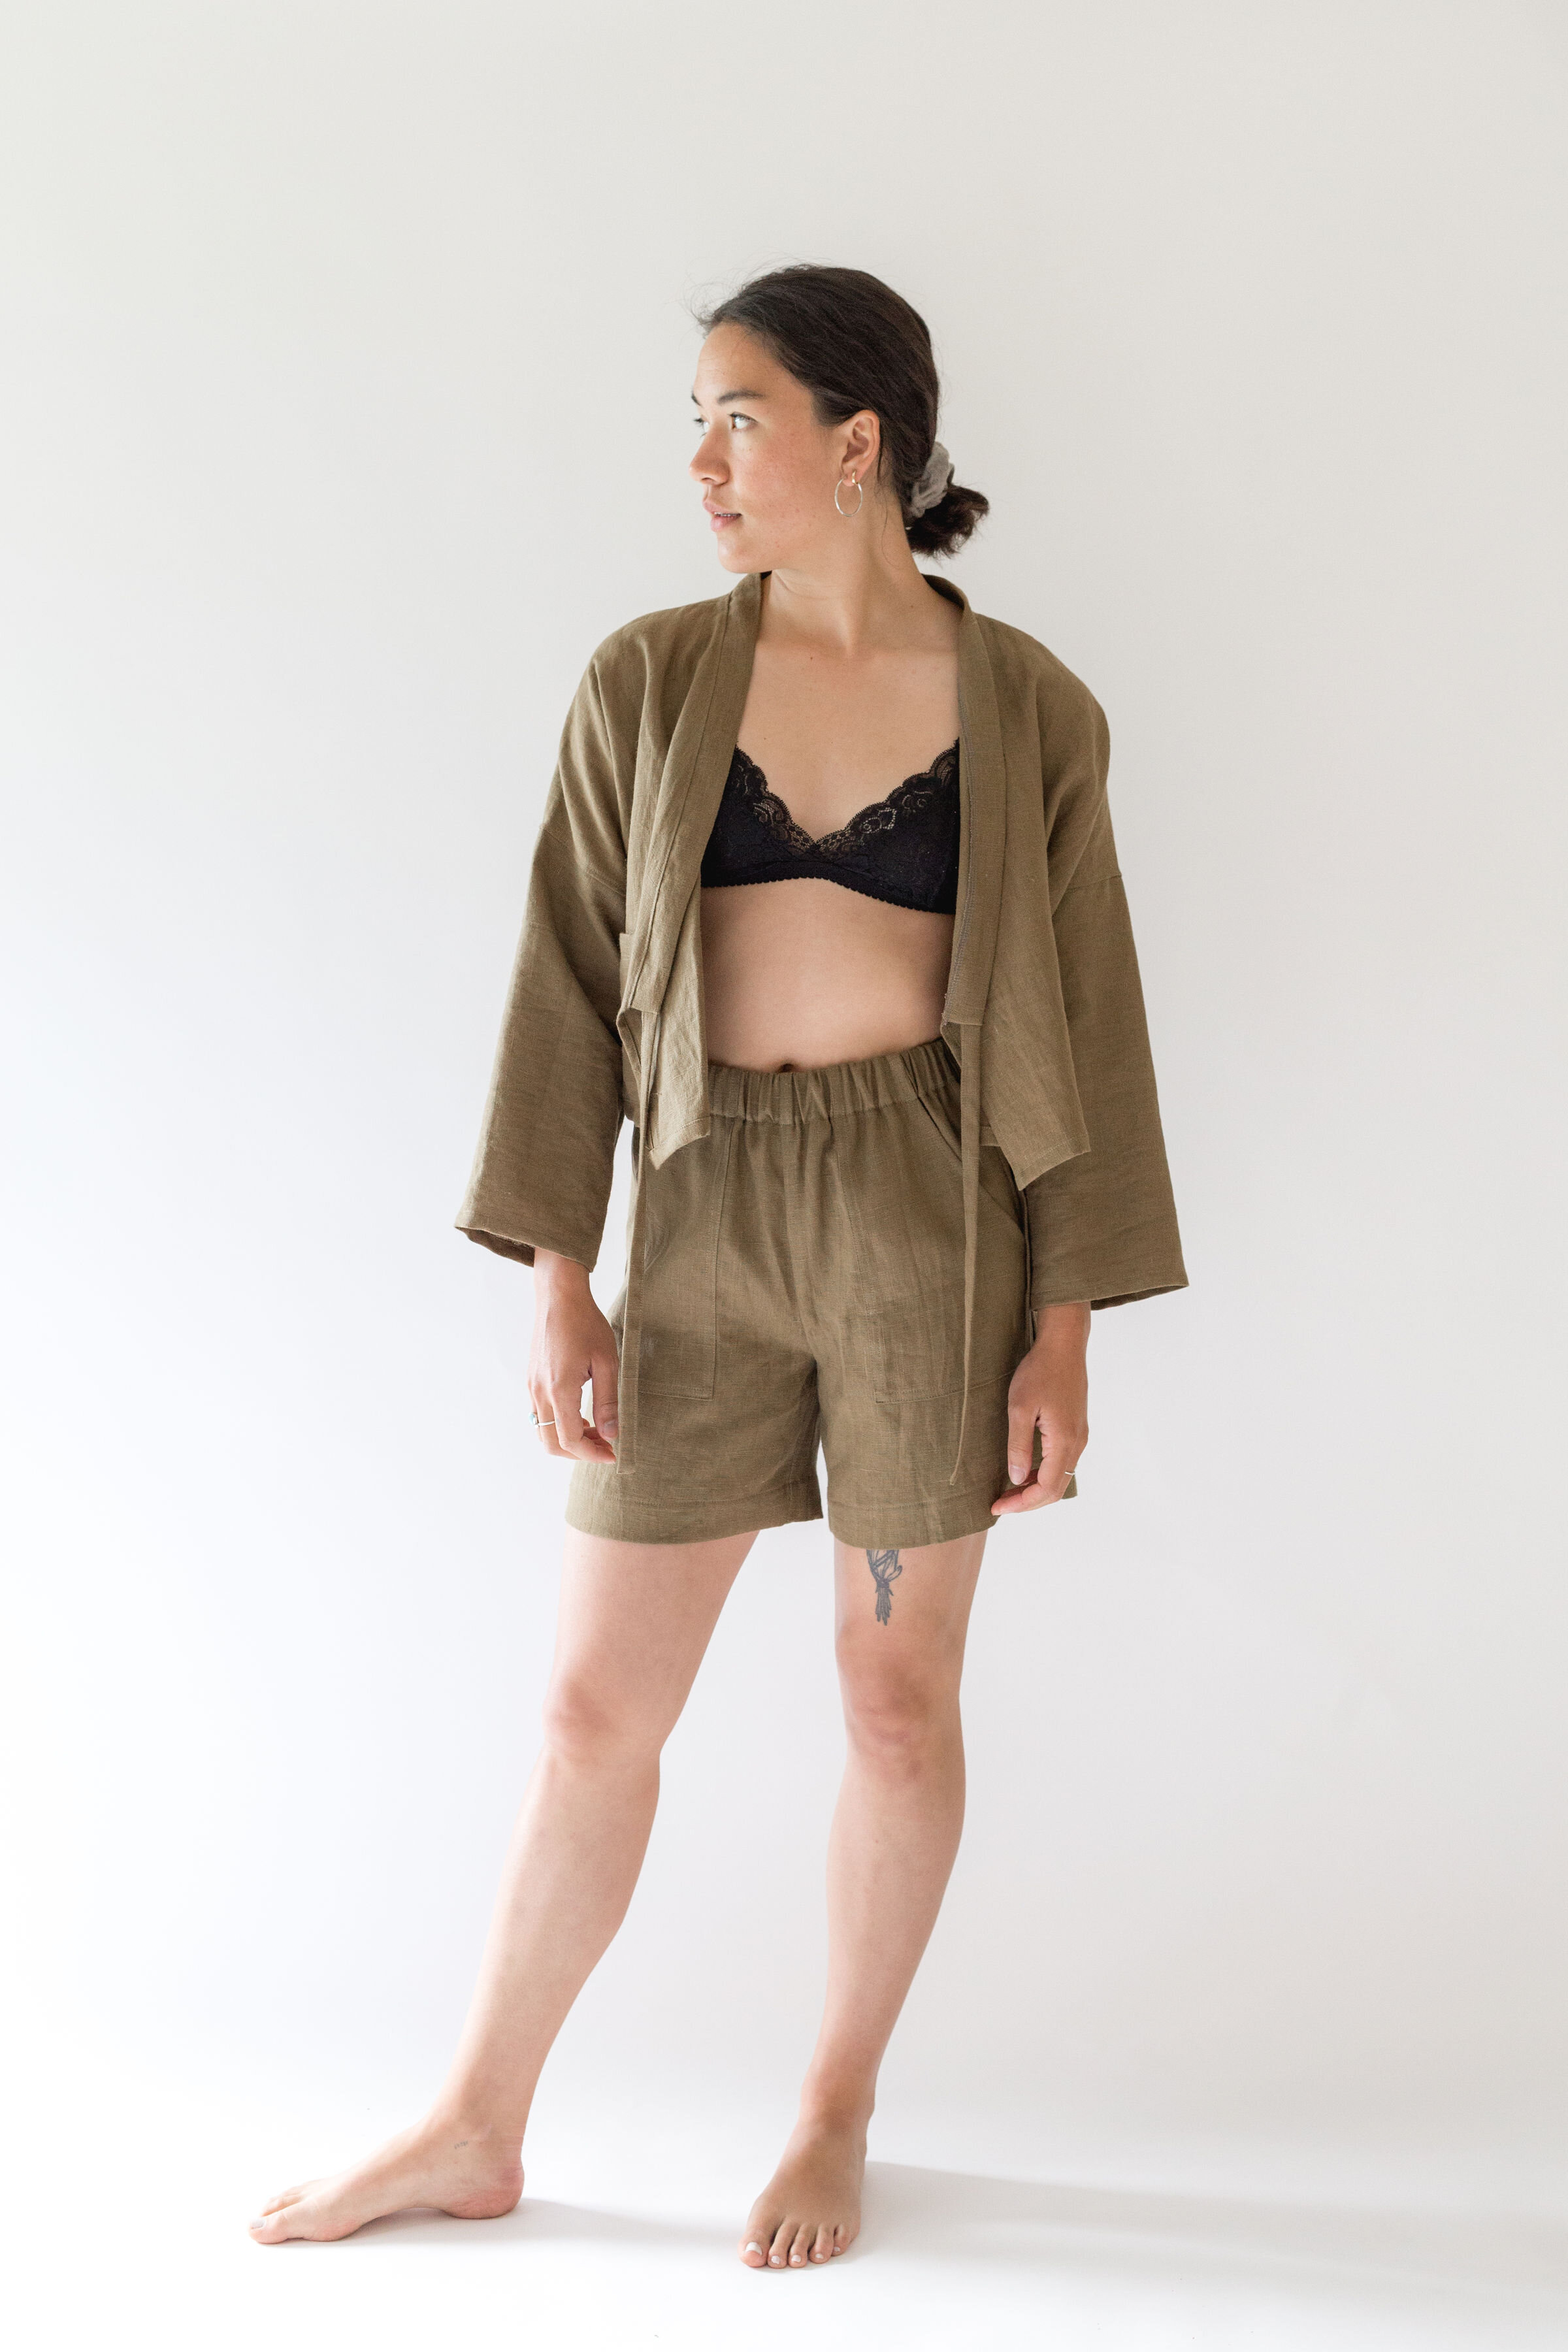 Stephanie shorts in Dark Moss, Sue wrap top in Dark Moss copy.jpg